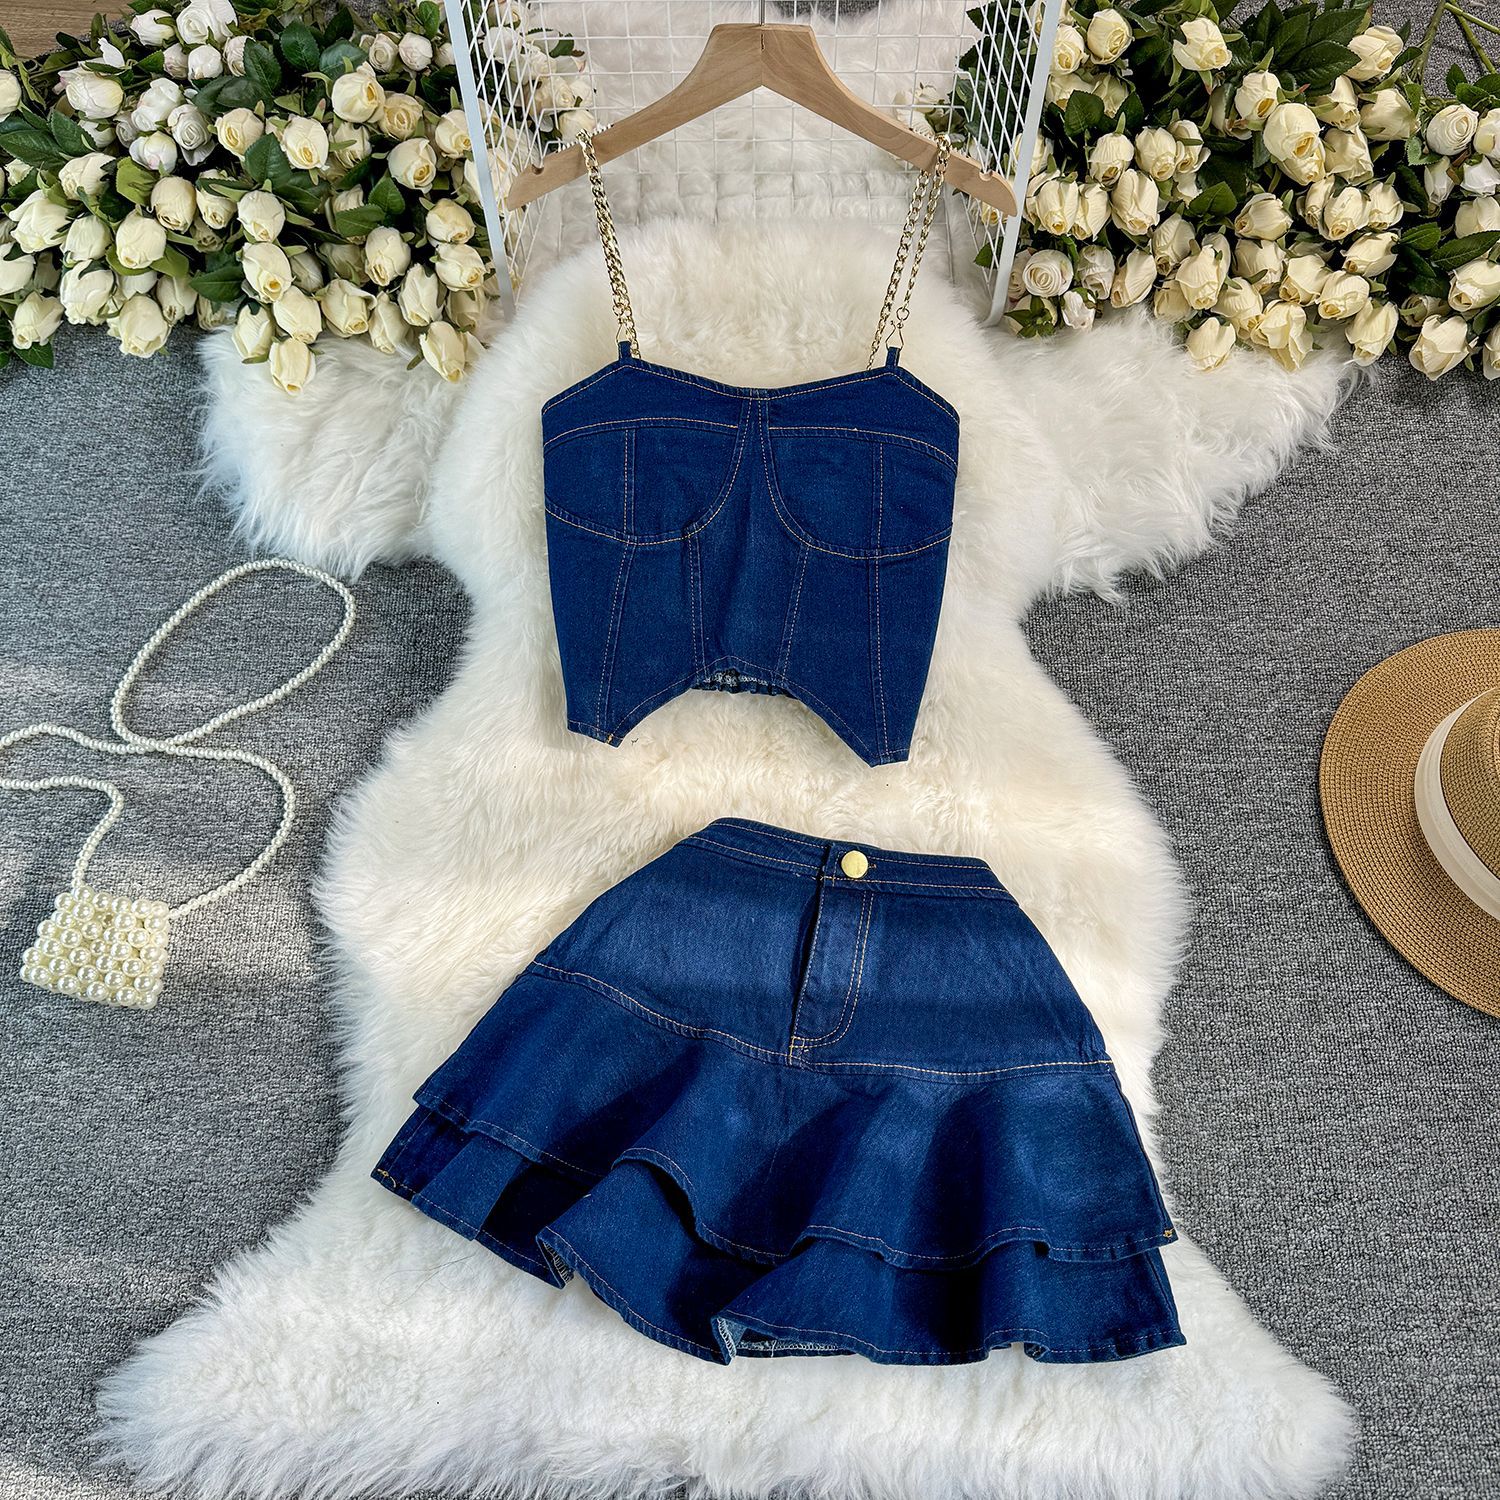 American Spicy Girl Denim Set with Pure Desire Style Chain Hanging Strap Bra Denim Top+High Waist A-Line Ruffle Edge Short Skirt